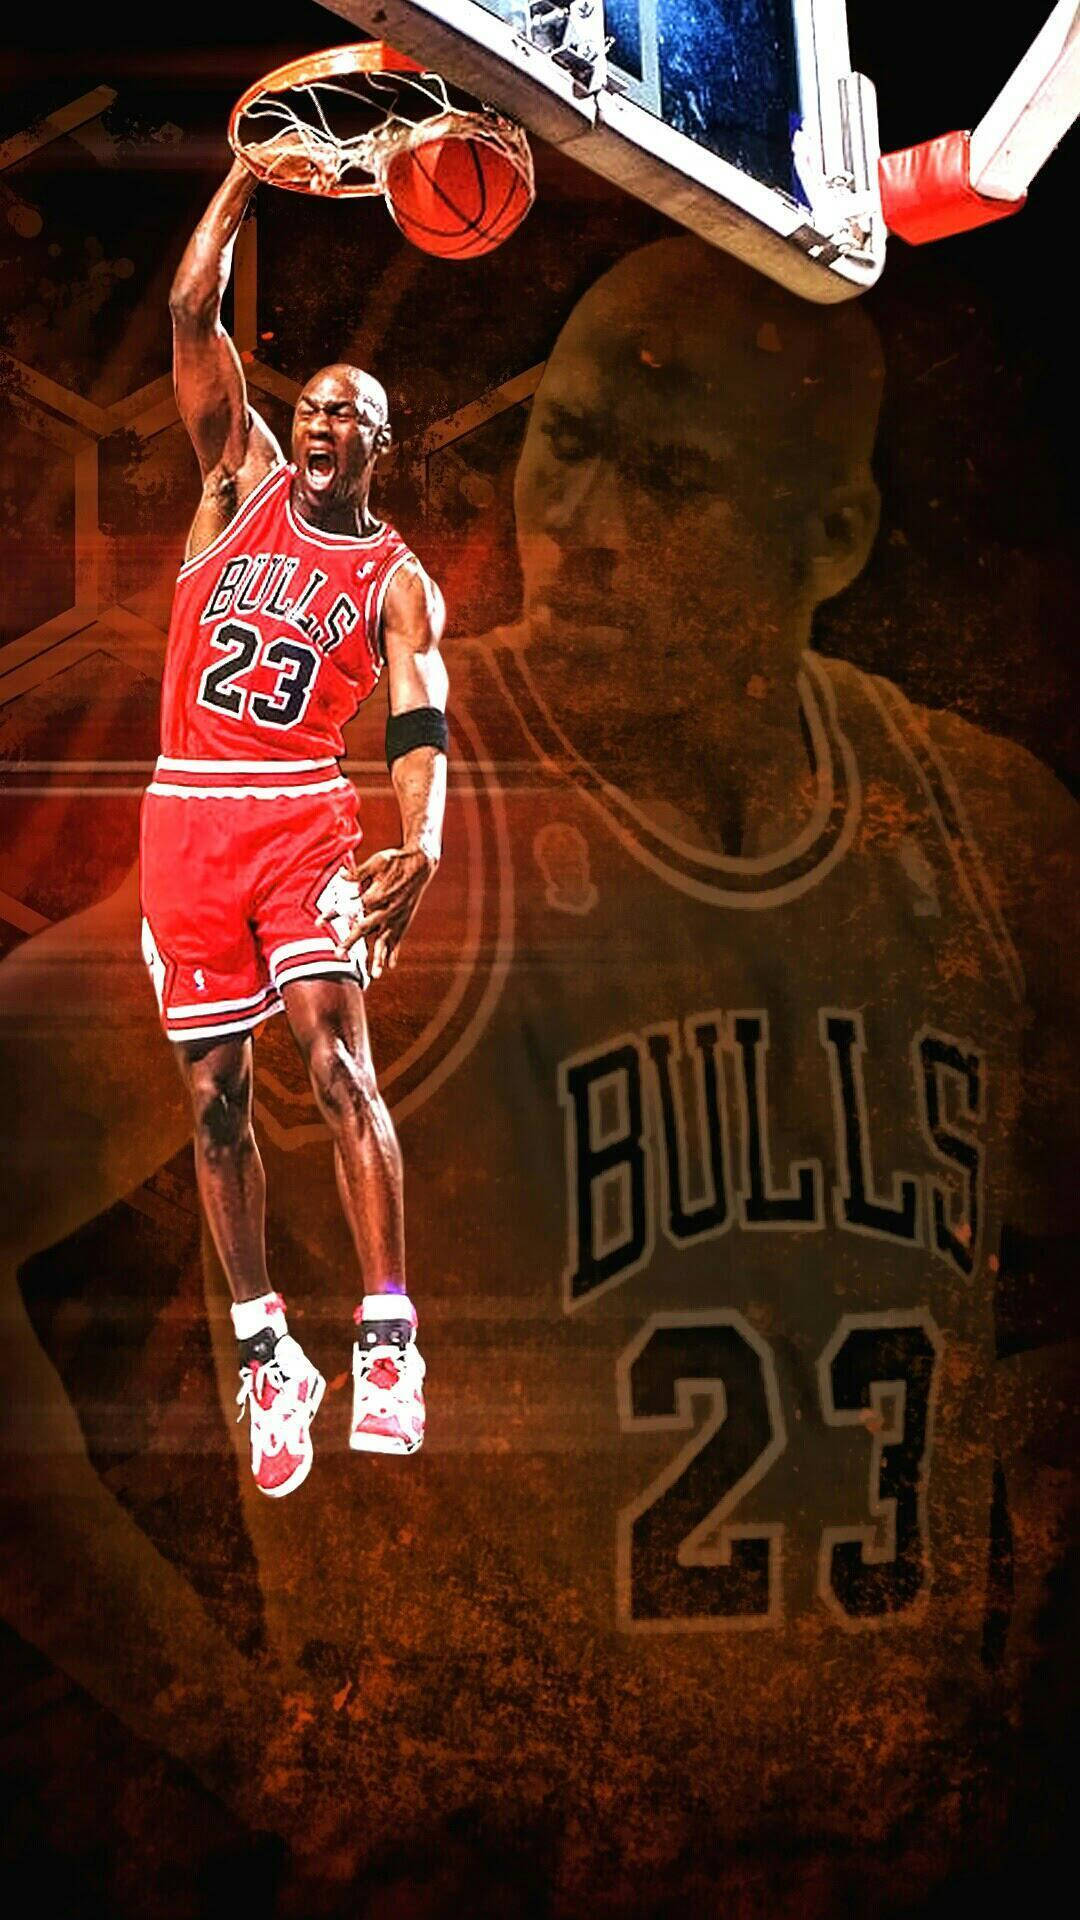 Michael Jordan 1080X1920 Wallpaper and Background Image